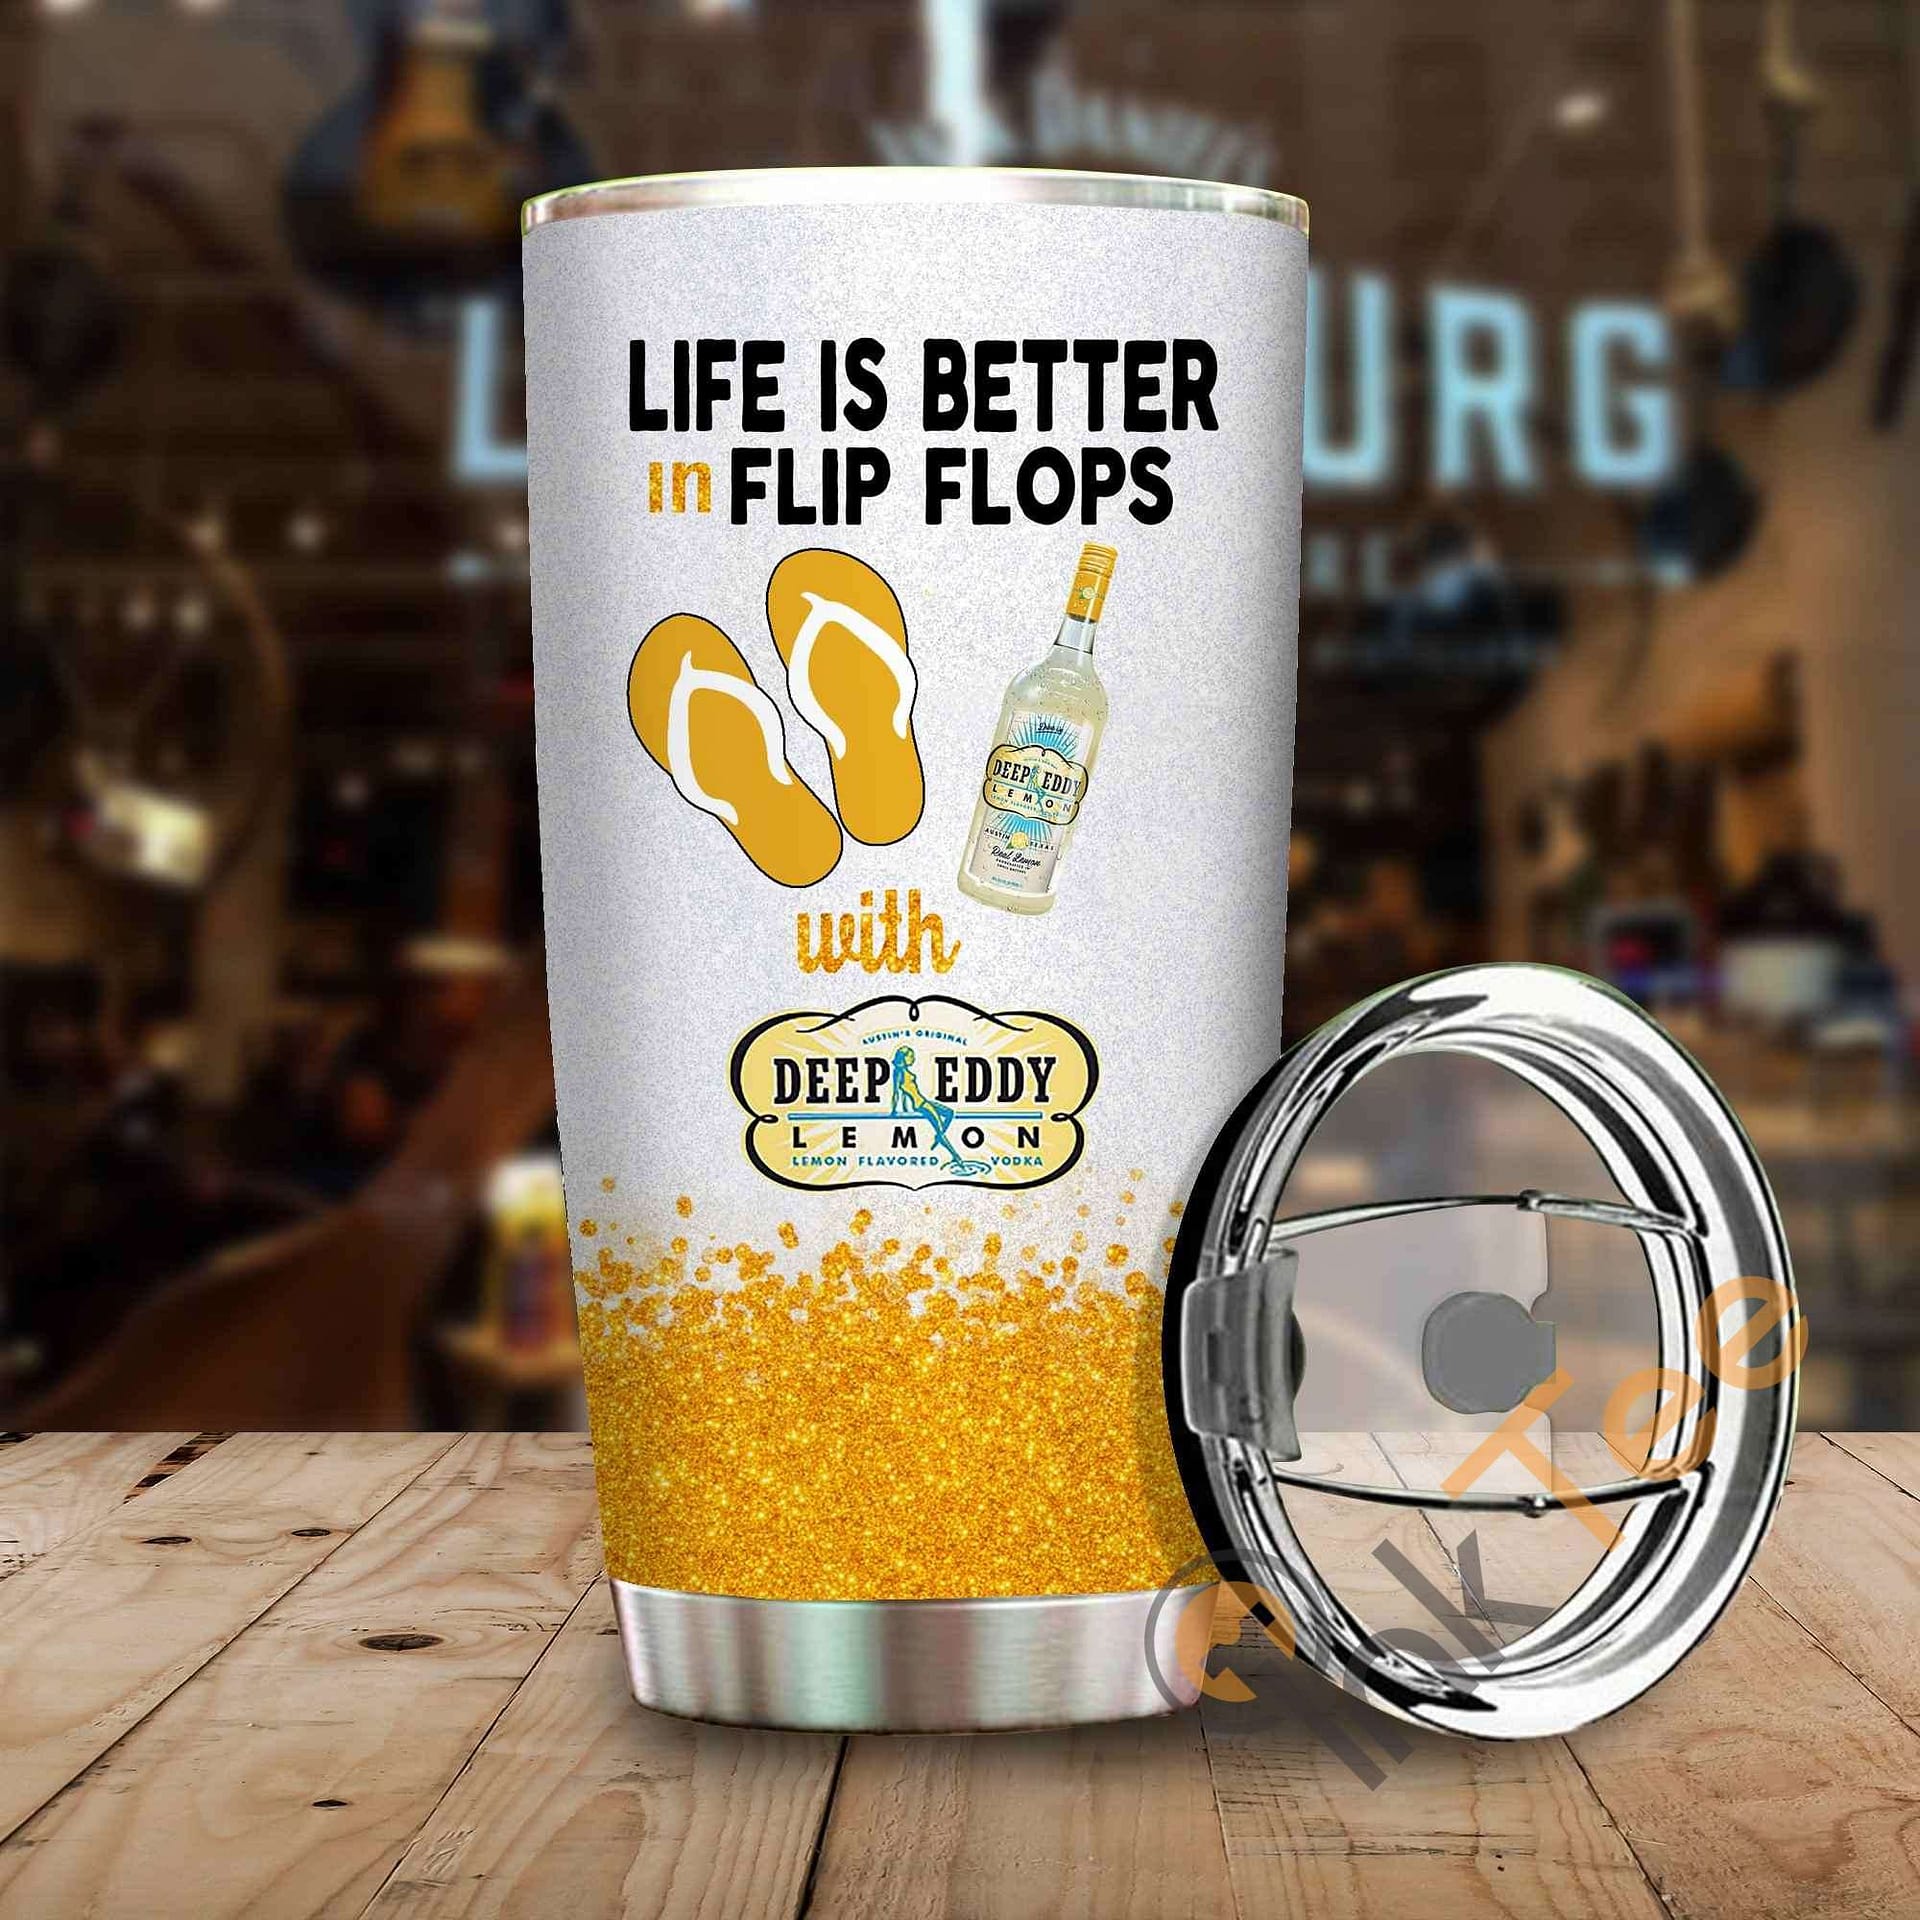 Life Is Better In Flip Flops With Deep Eddy Lemon Amazon Best Seller Sku 4072 Stainless Steel Tumbler